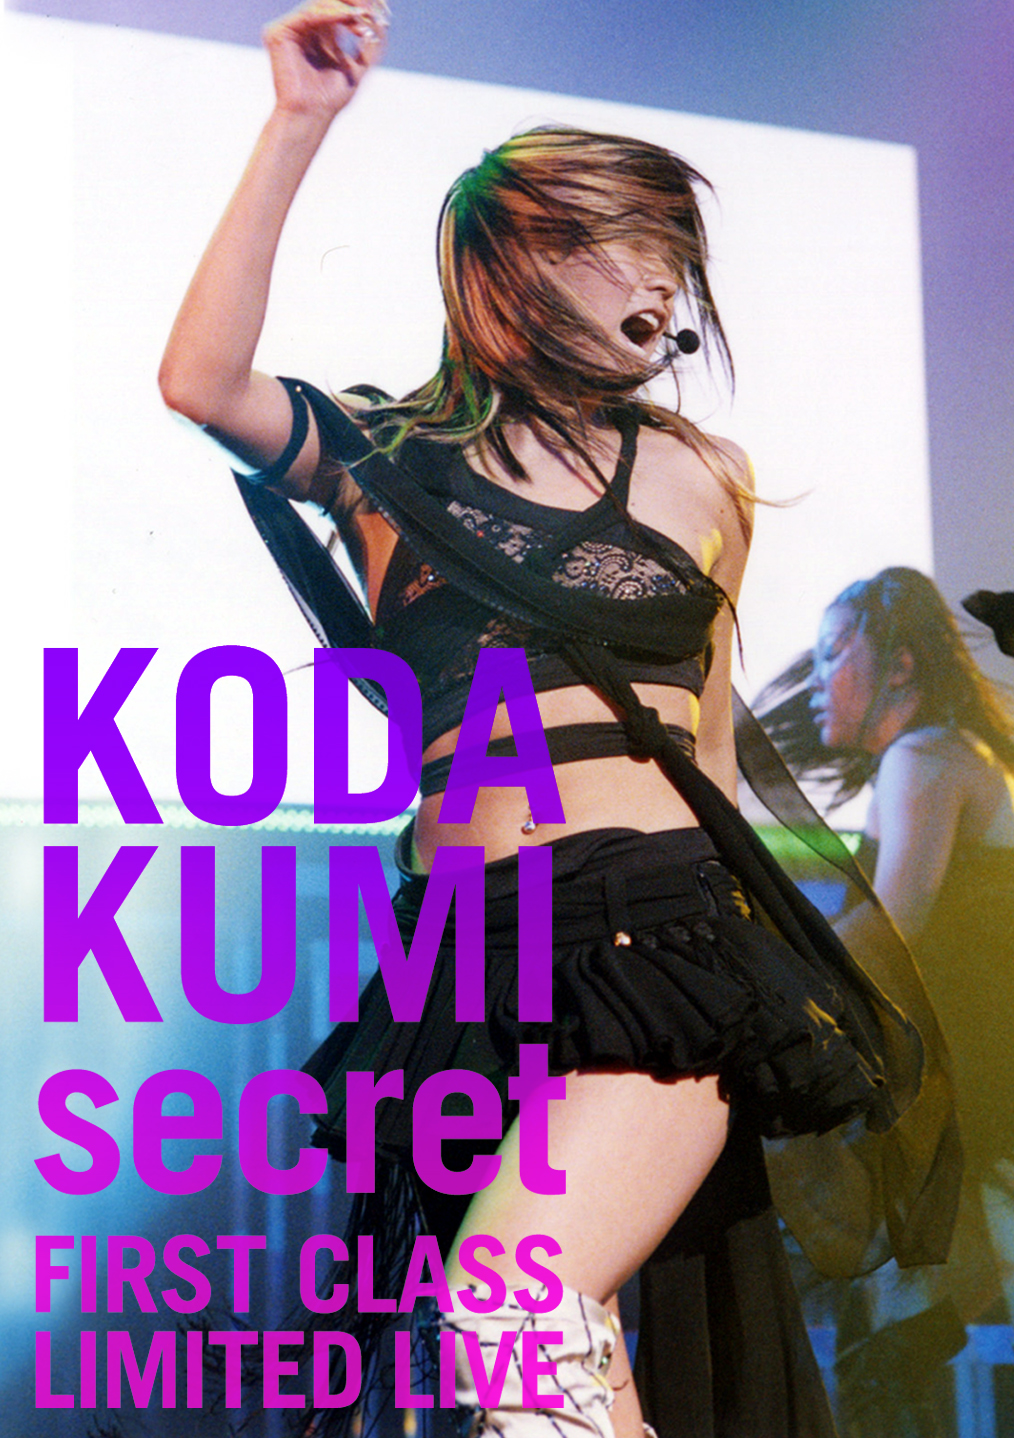 KODA KUMI secret FIRST CLASS LIMITED LIVE